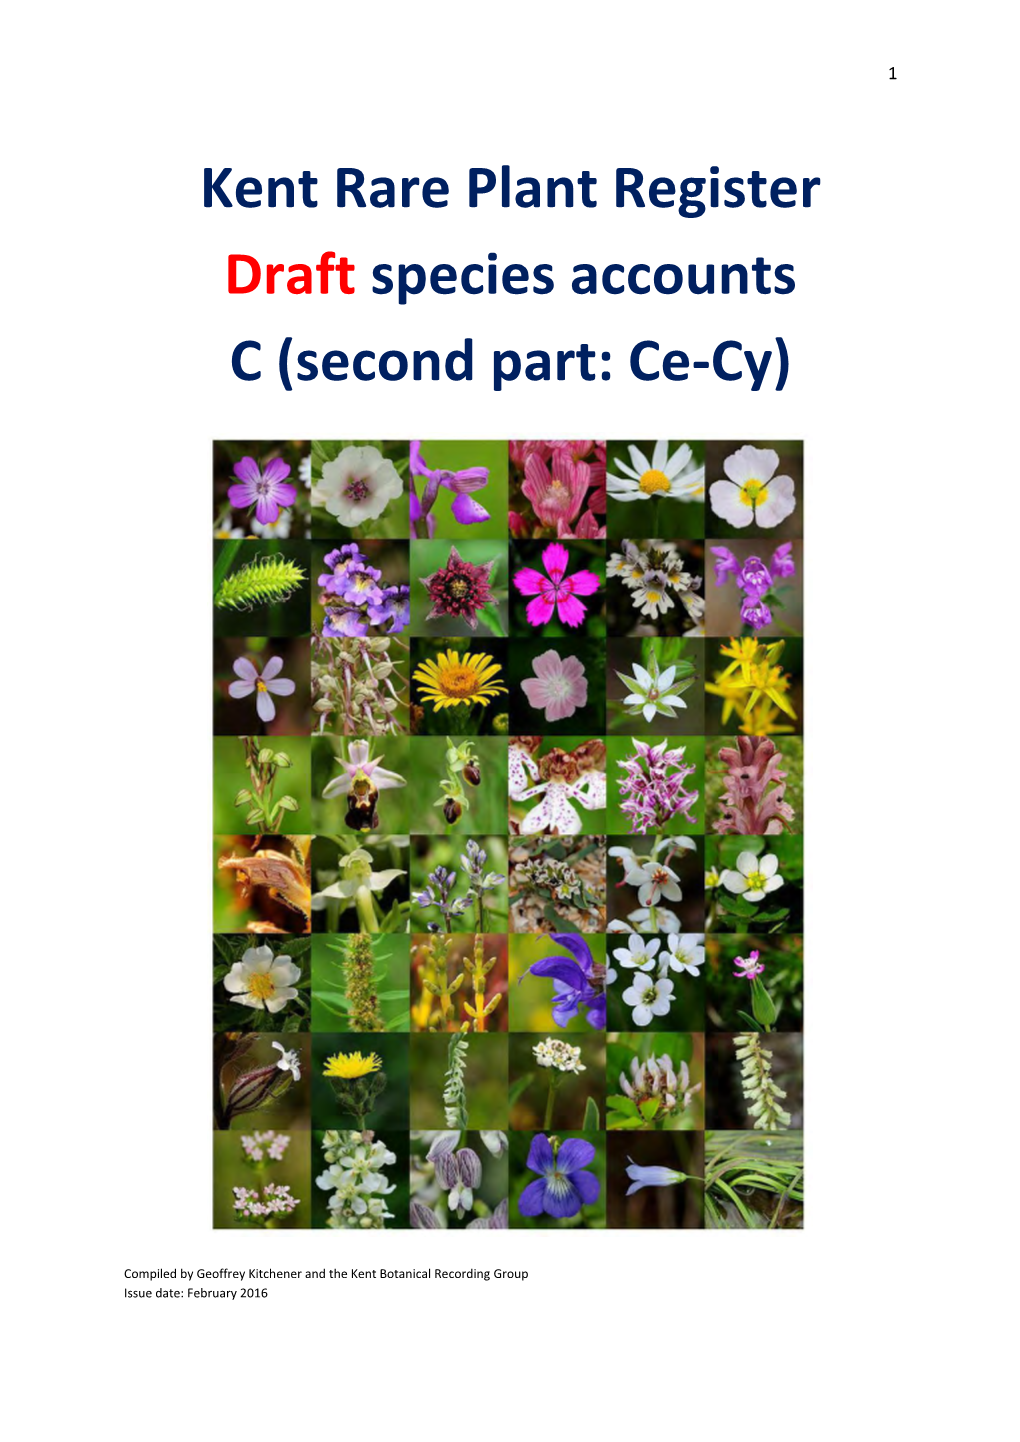 Kent Rare Plant Register Draft Species Accounts C (Second Part: Ce-Cy)